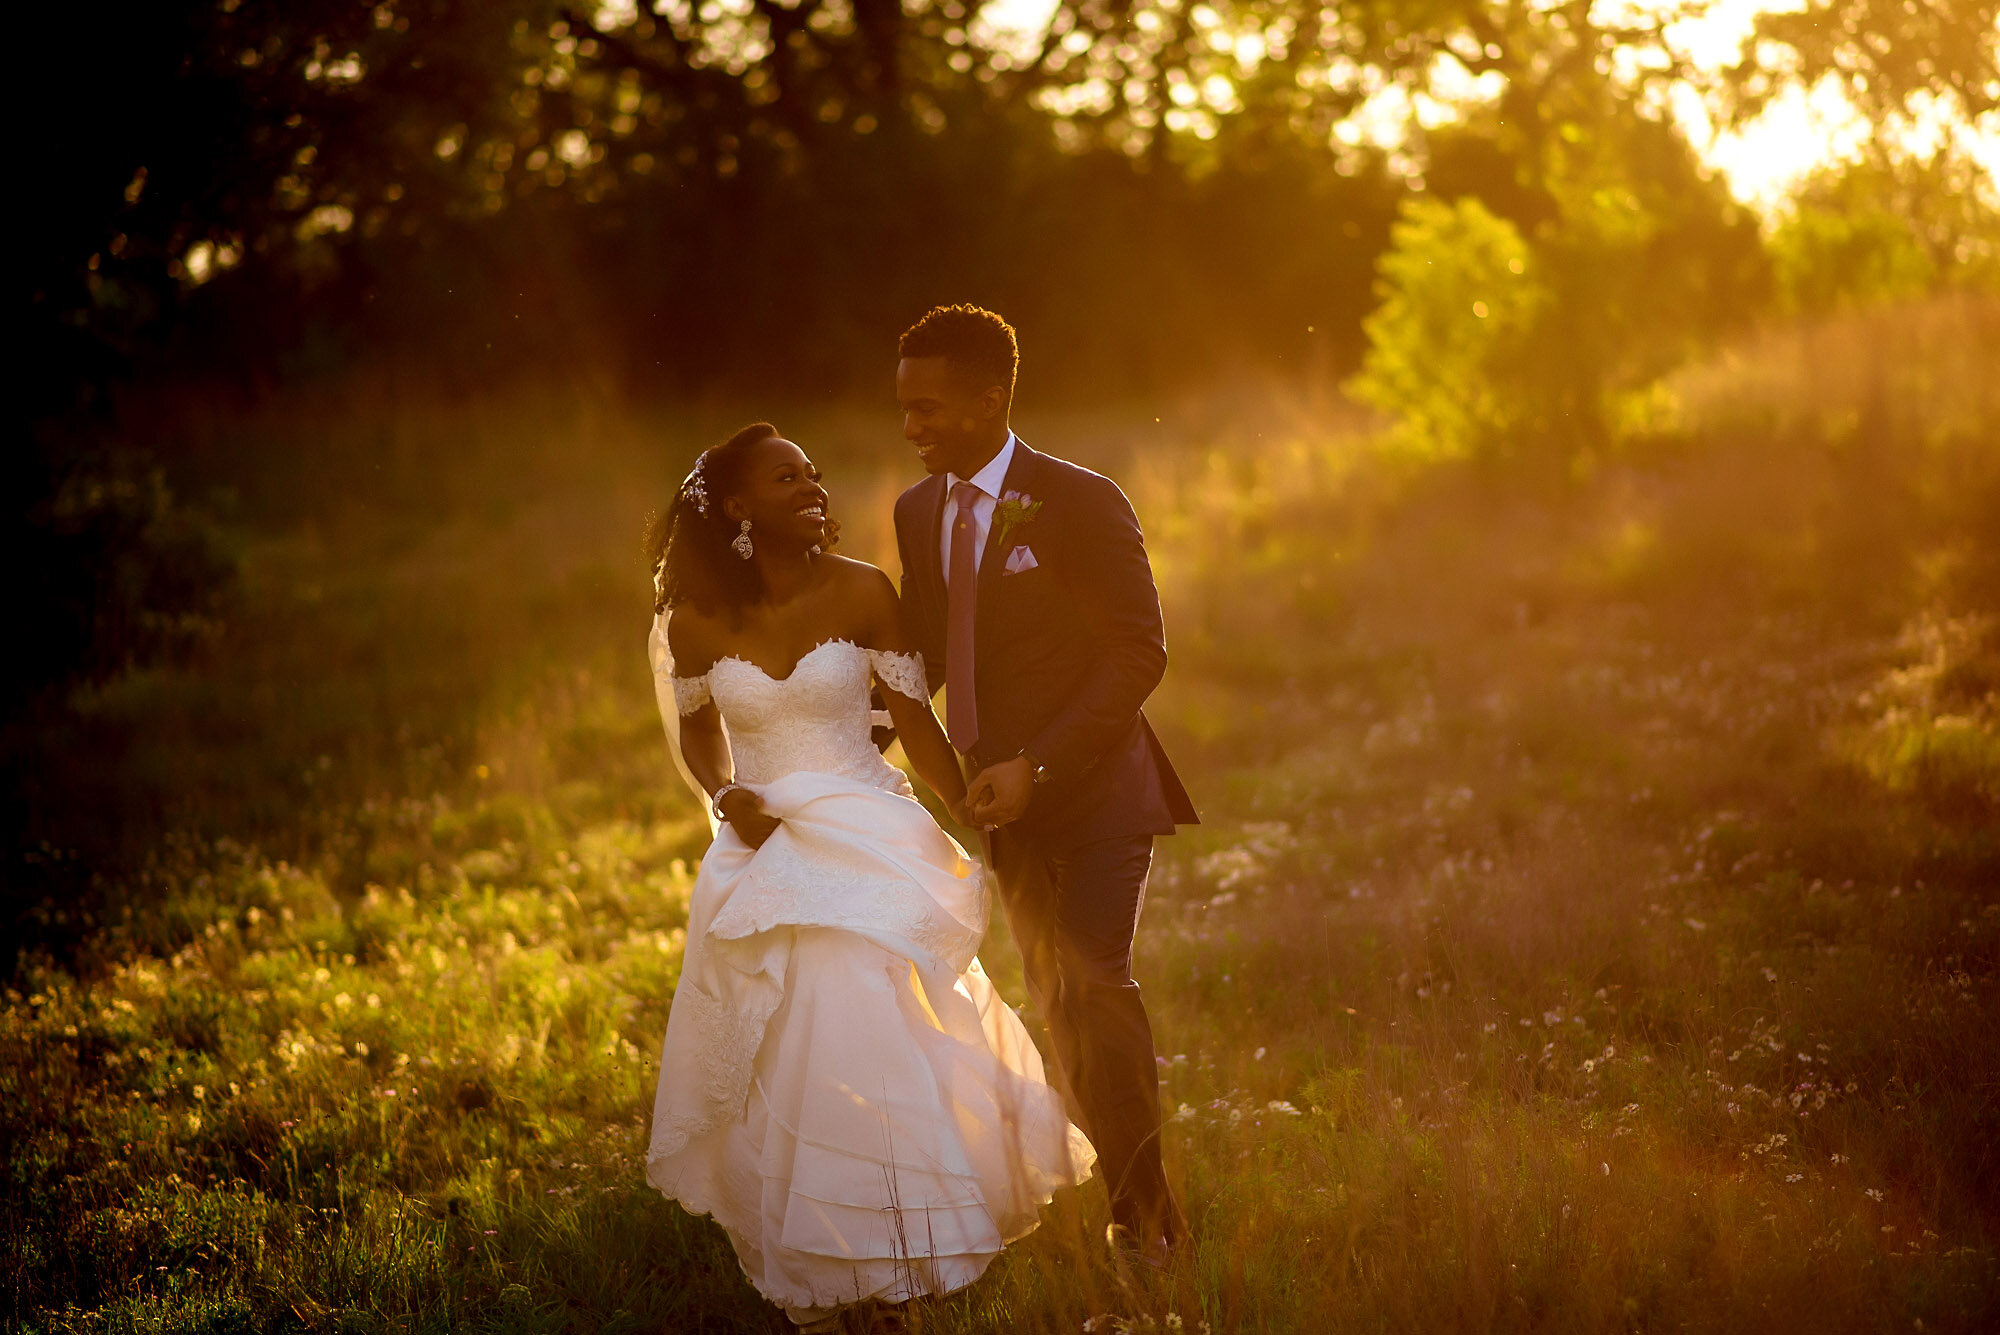 37-Austin-wedding-photographer-Jide-Alakija-couple walking in the sunset.jpg.JPG